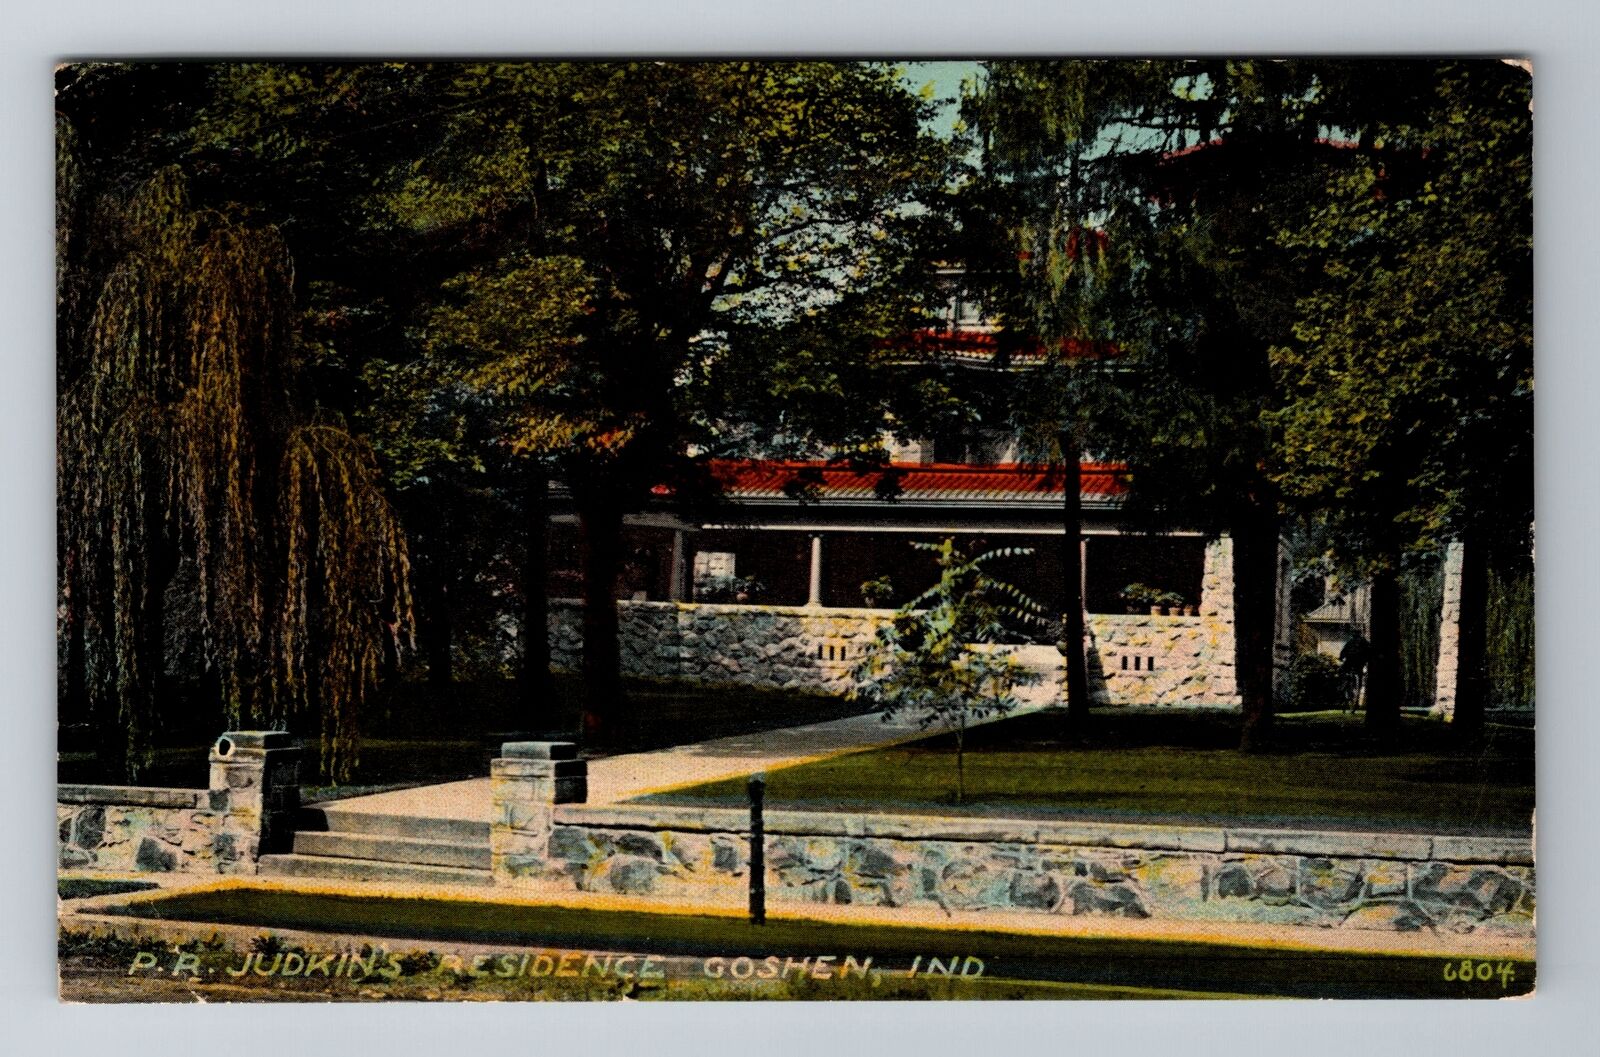 Goshen IN-Indiana, P R Judkins Residence, Antique, Vintage c1914 Postcard